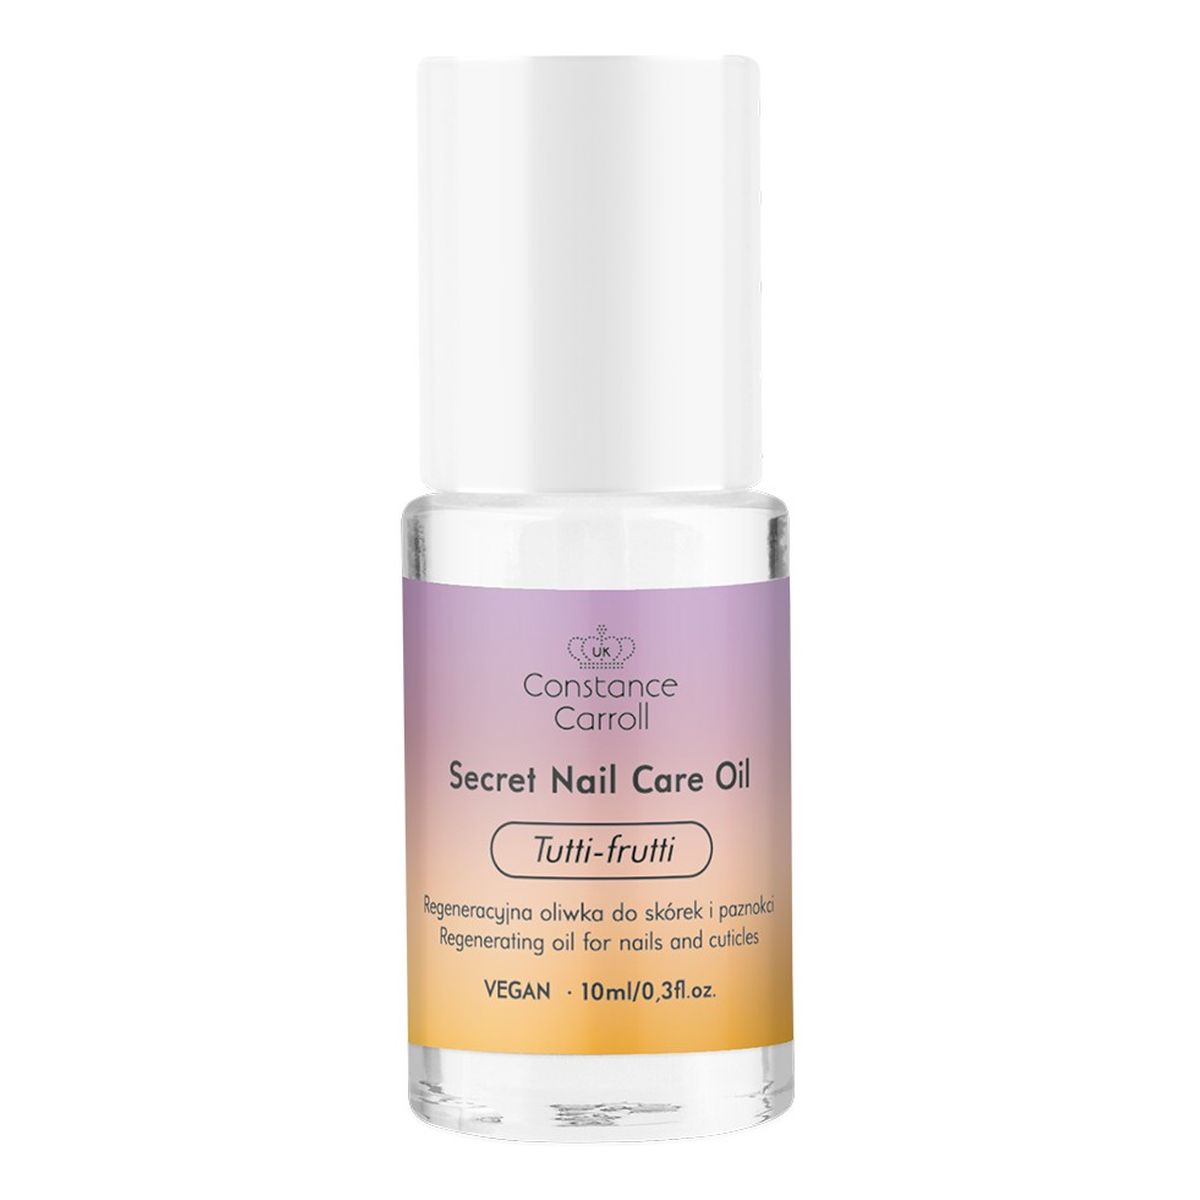 Constance Carroll Secret Nail Care Oil Regeneracyjna Oliwka do skórek i paznokci - Tutti Frutti 10ml